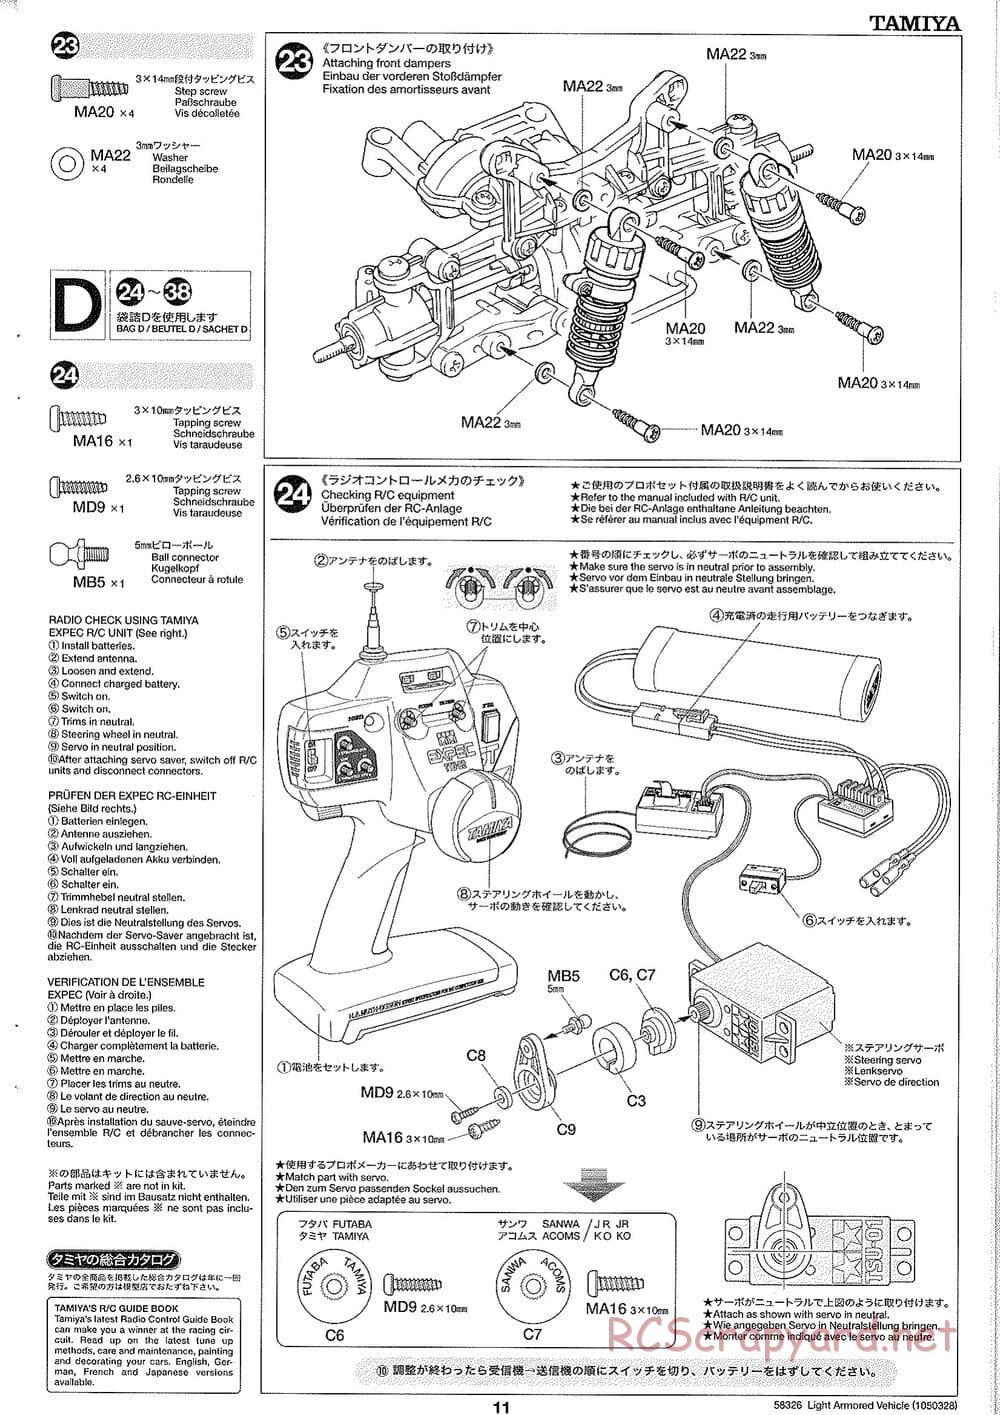 Tamiya - JGSDF Light Armored Vehicle - TA-01 Chassis - Manual - Page 11